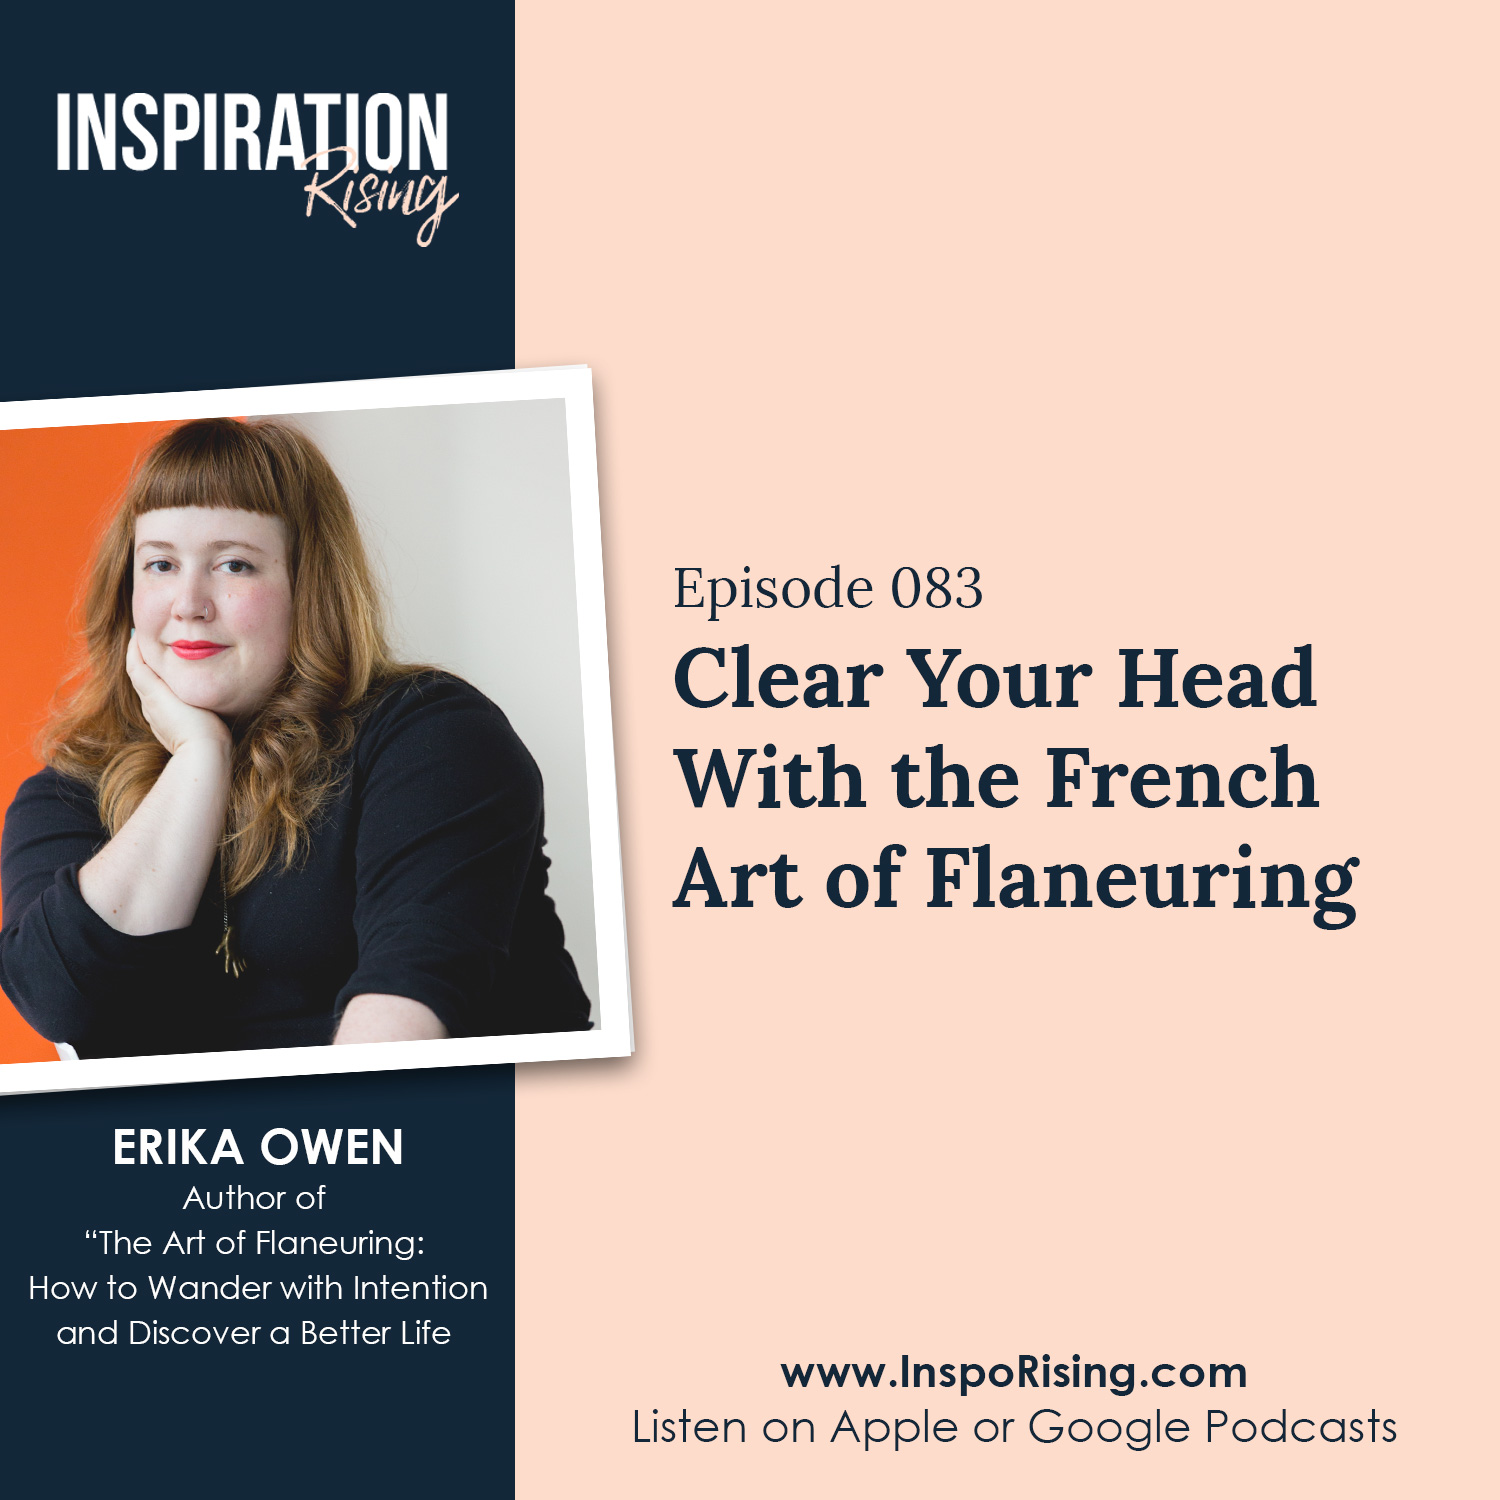 Erika Owen - The Art of Flaneuring